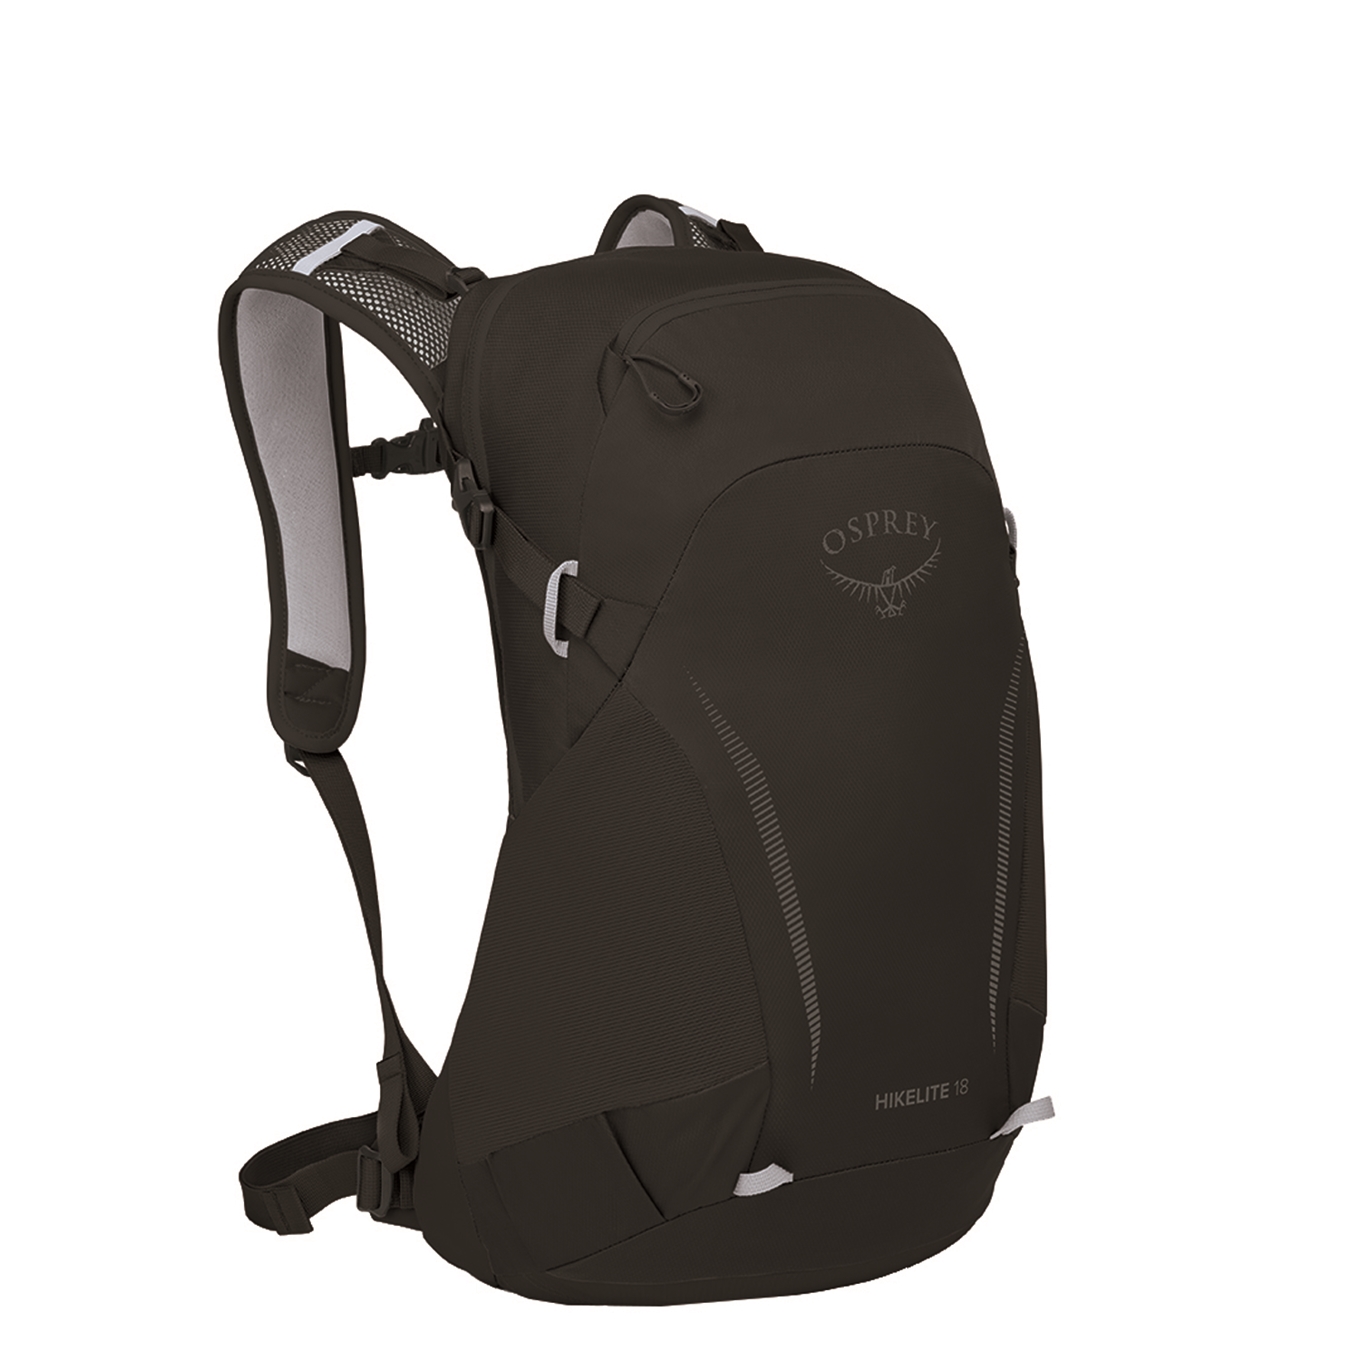 Osprey Hikelite 18 black backpack